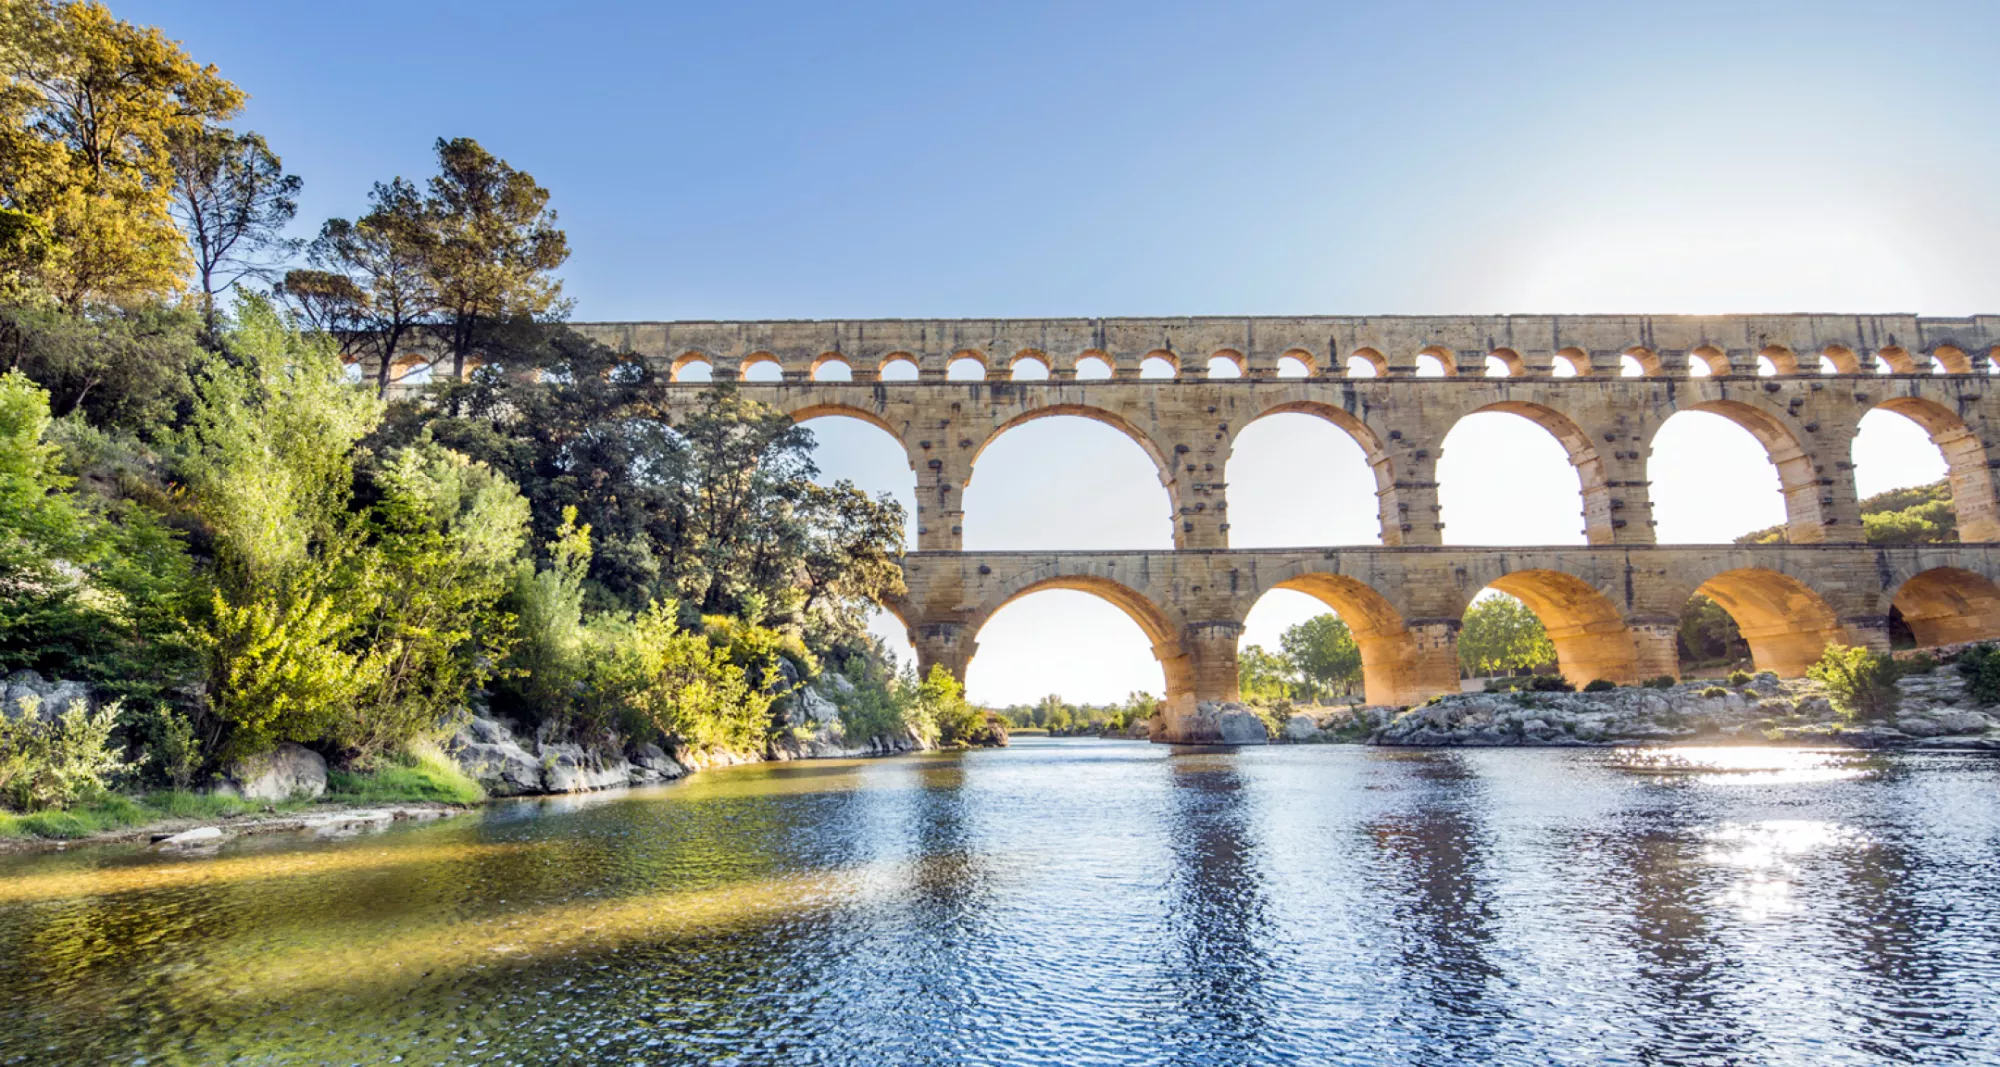 The Pont du Gard - A symbol of Roman engineering